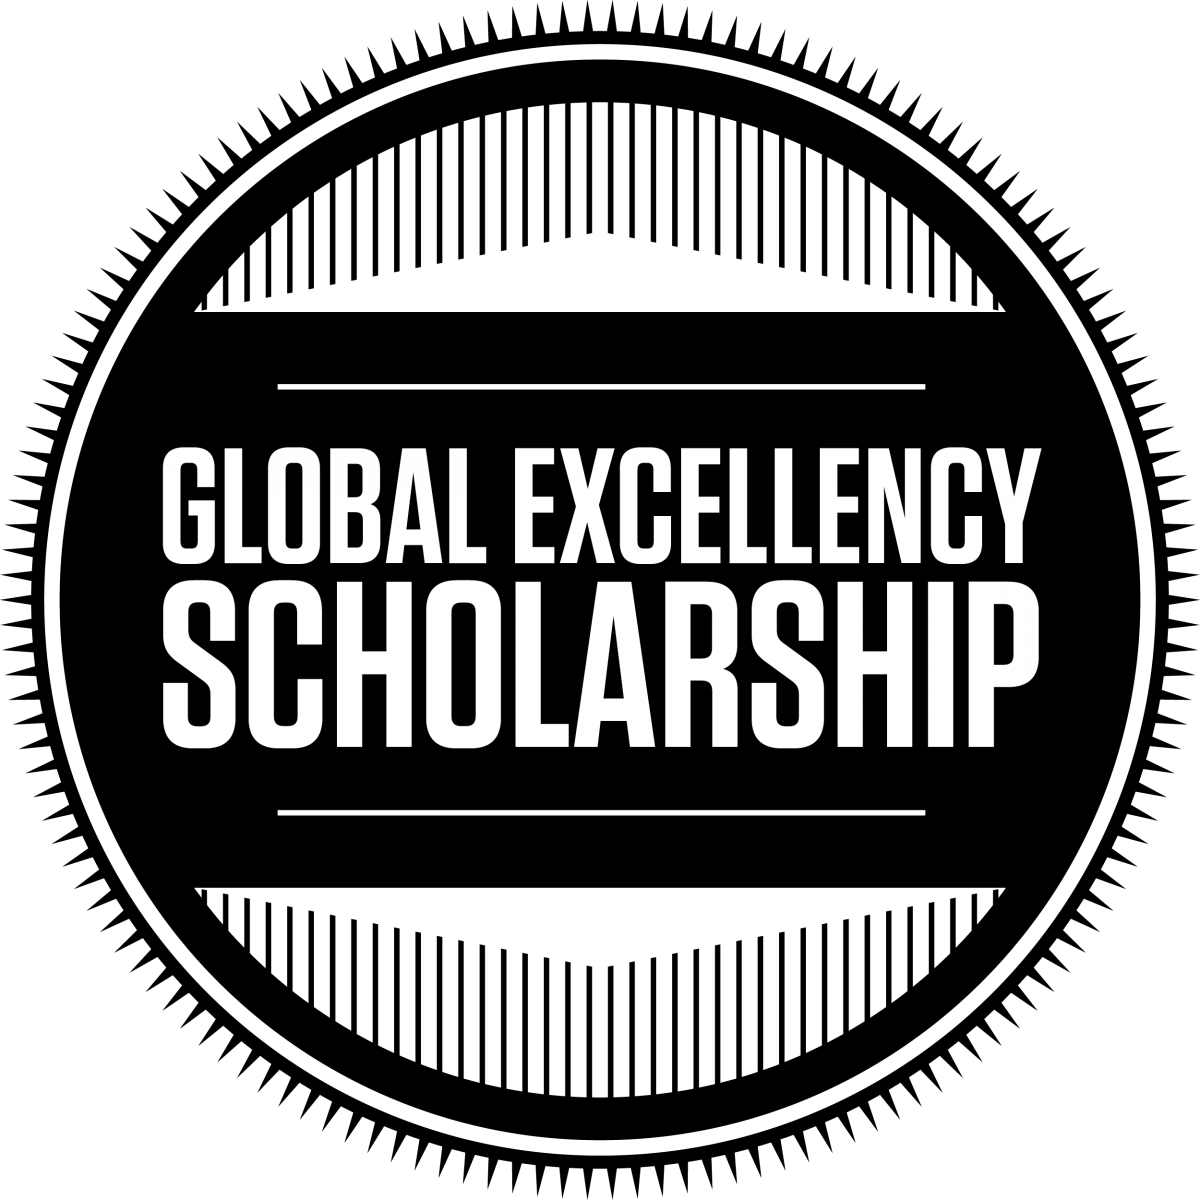 Global Diplomat Scholarship logo